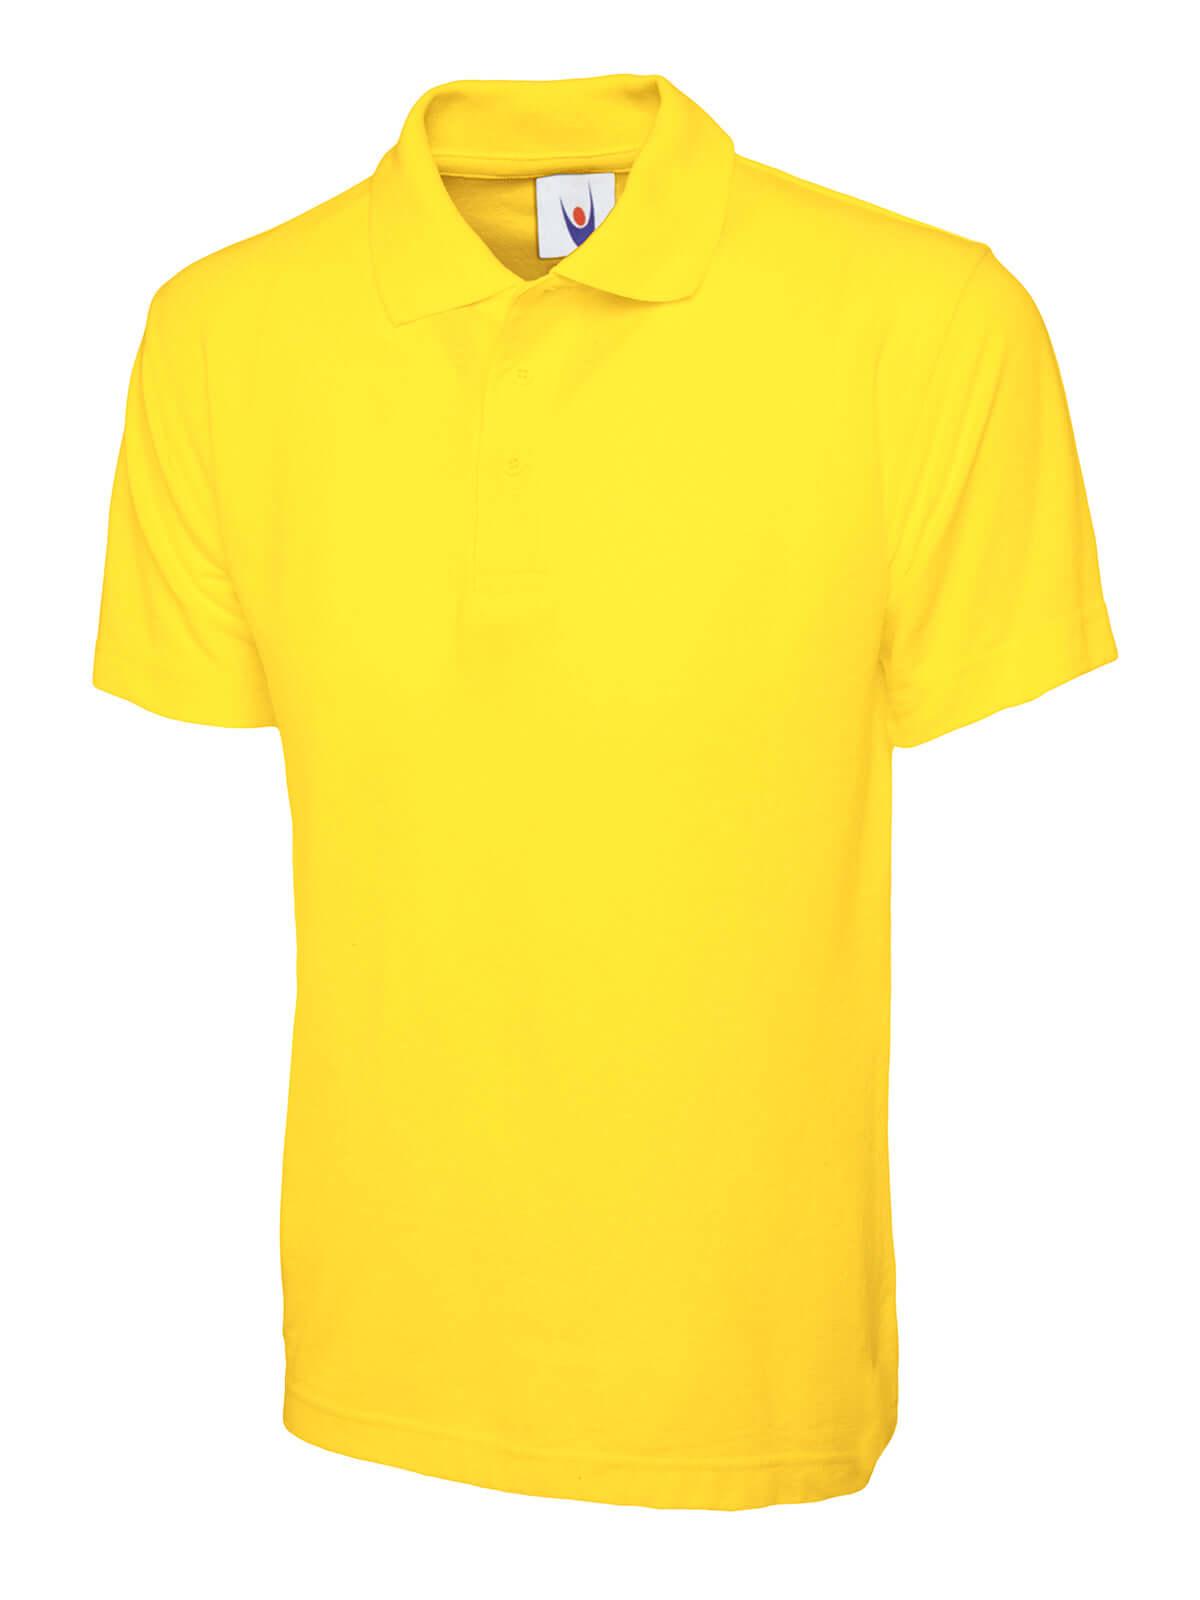 Pegasus Uniform Classic Unisex Polo Shirt - Yellow